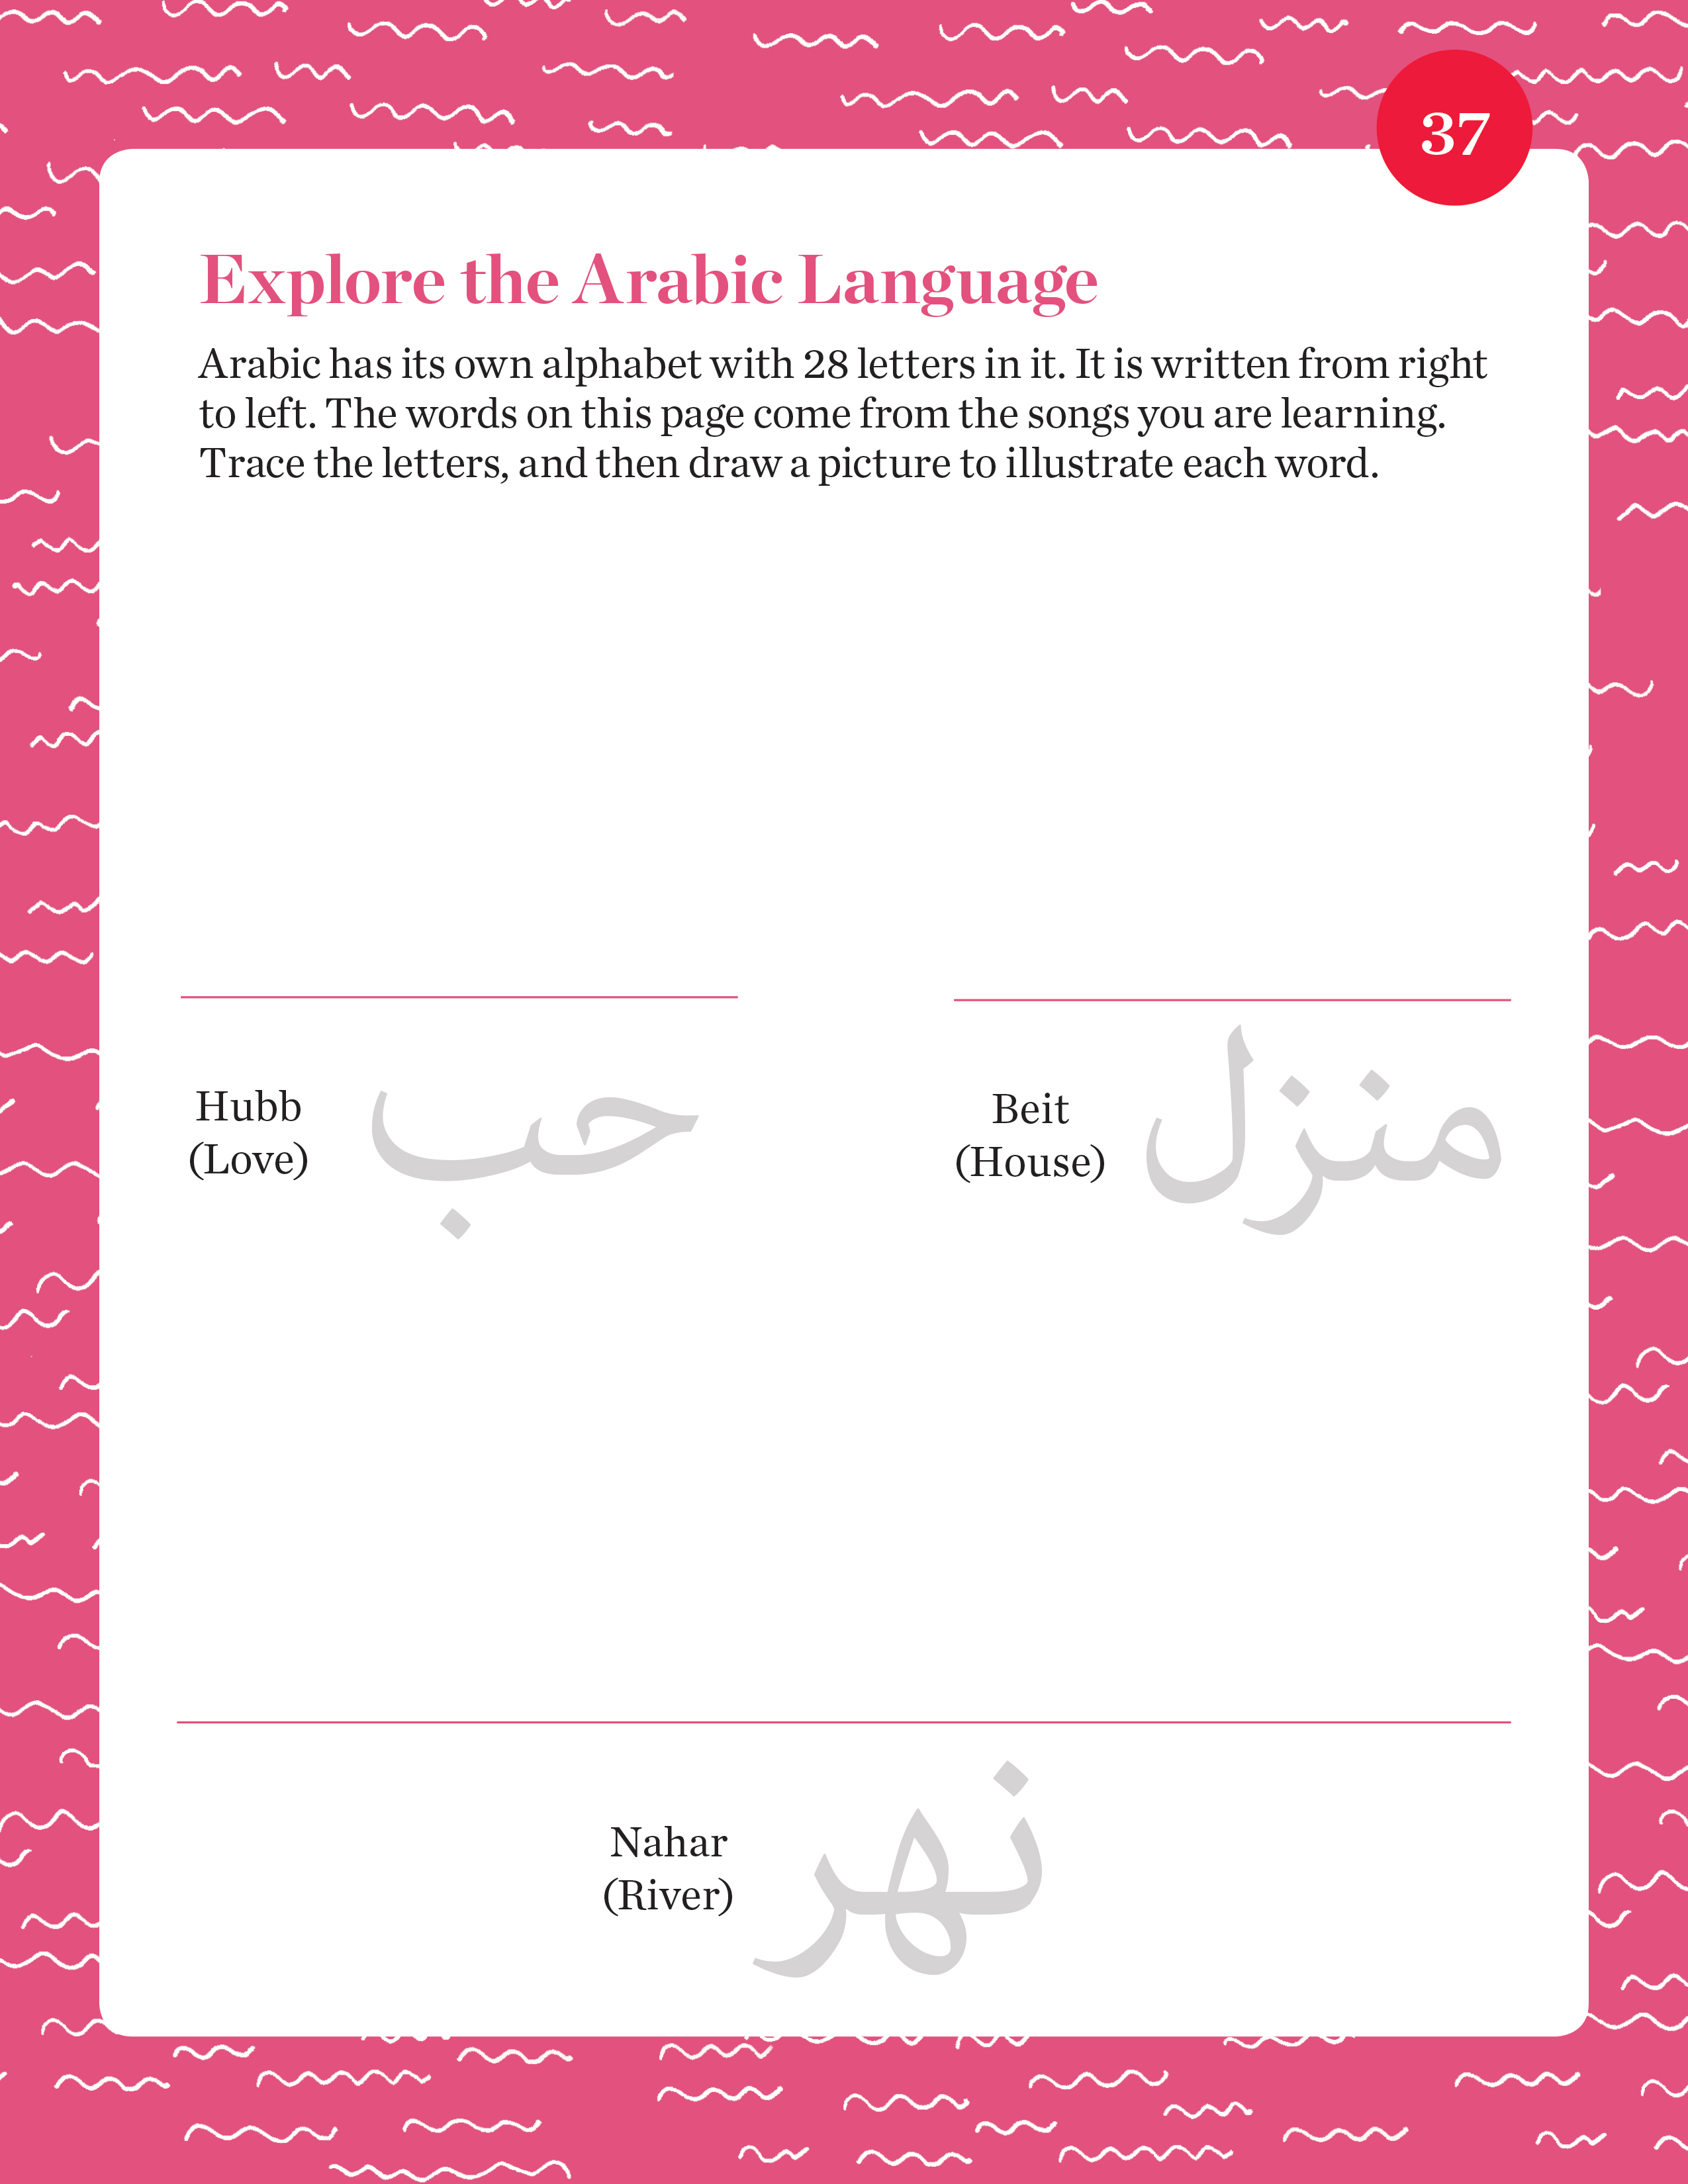 Explore the Arabic Language student activity